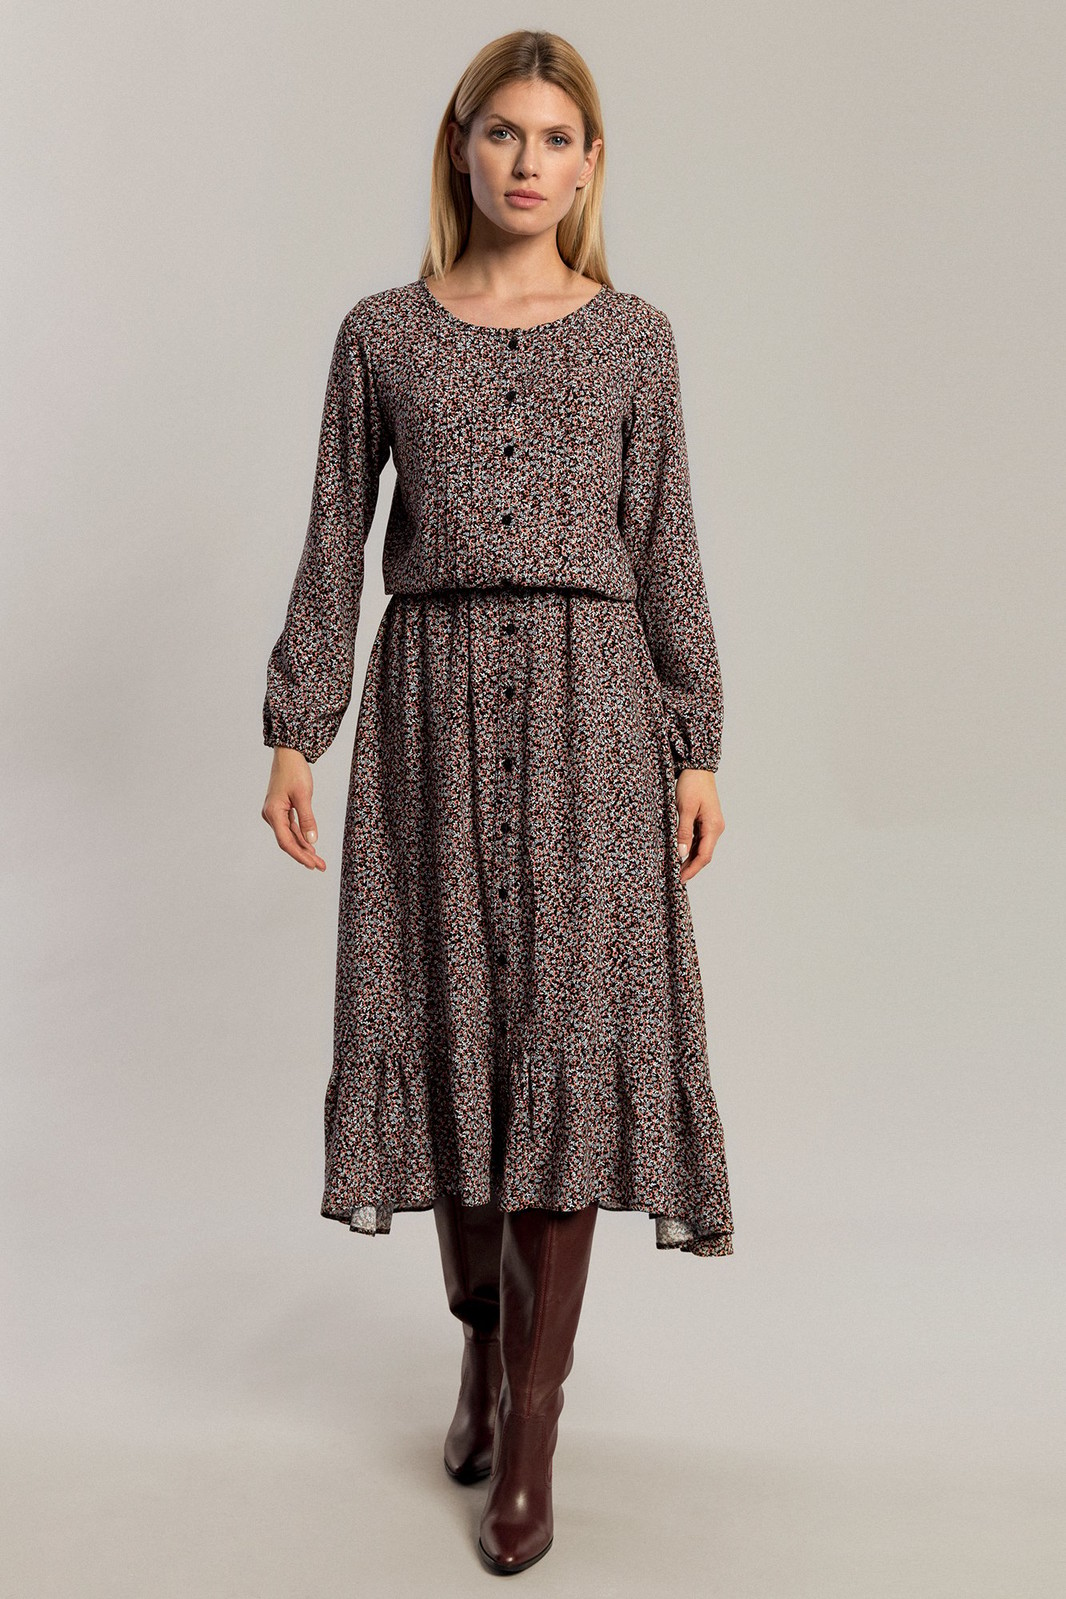 Benedict Harper Woman's Dress Lilly